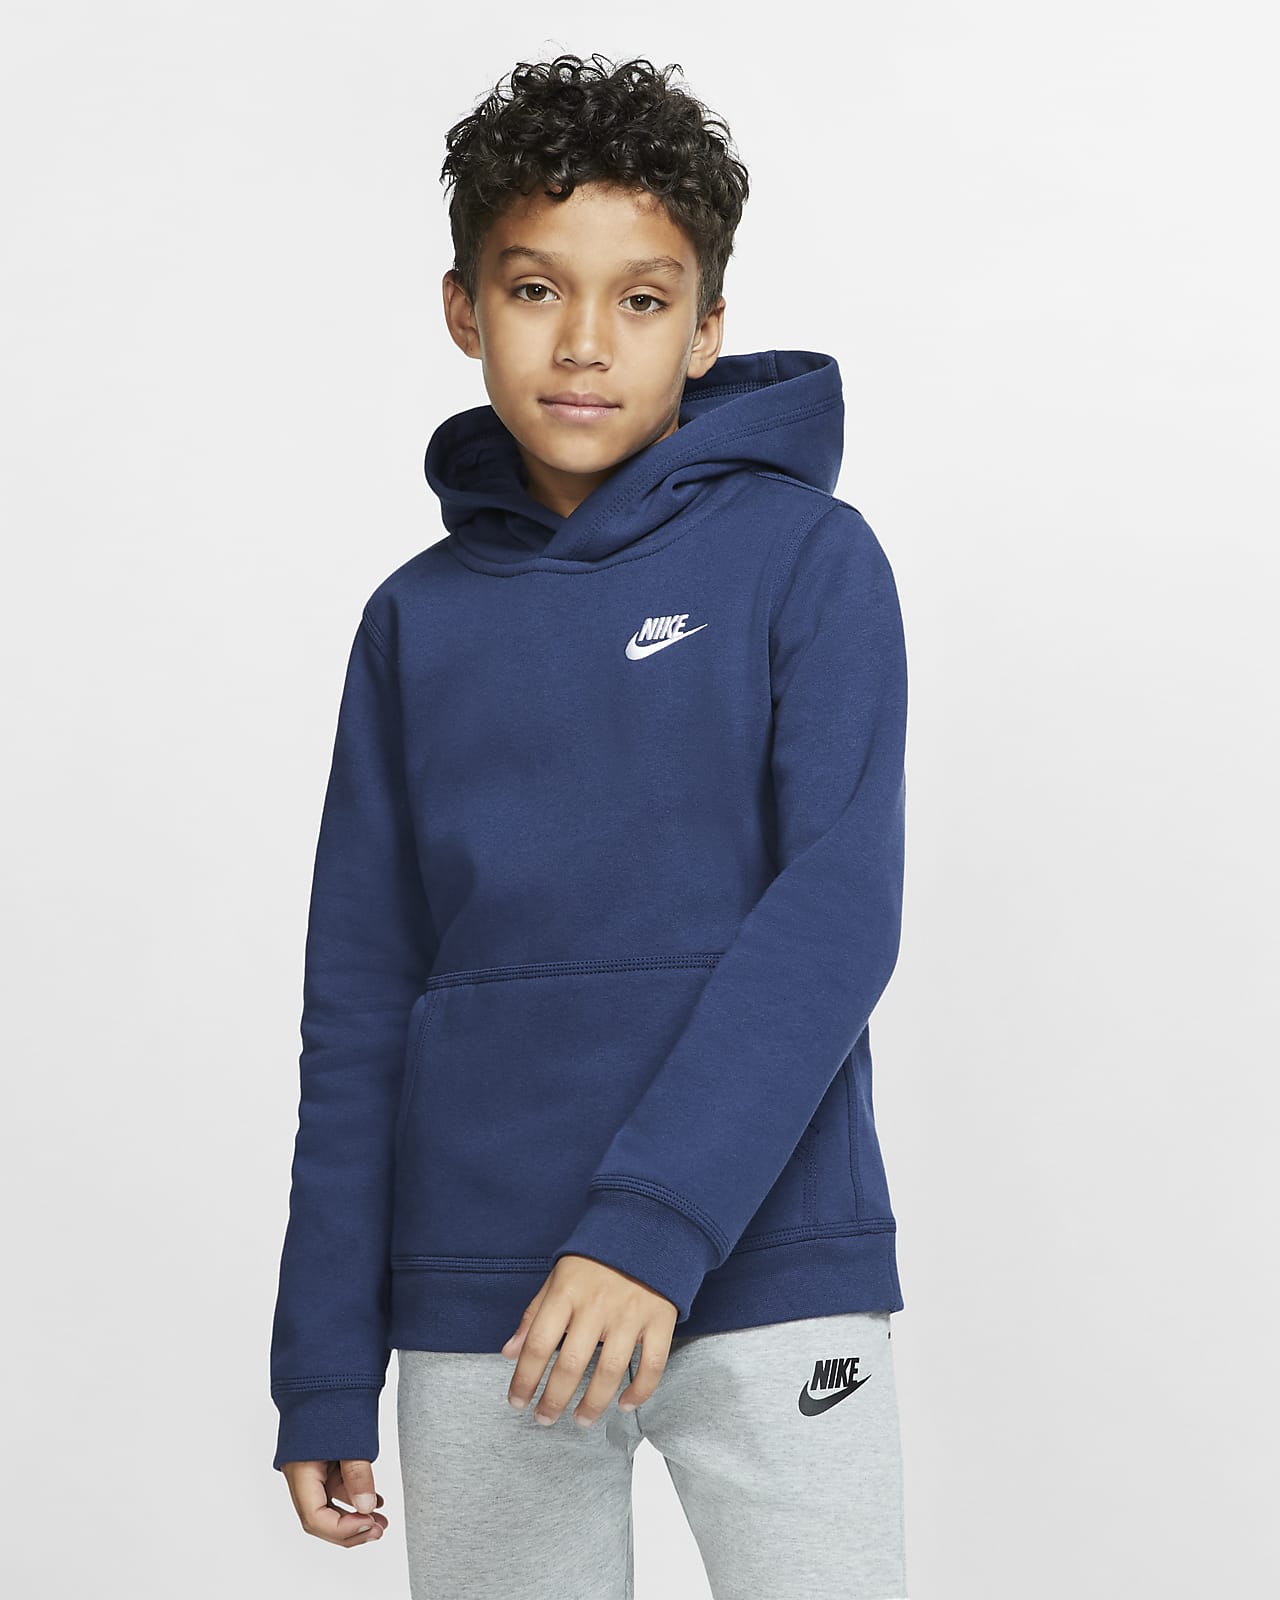 Sportswear Pullover für LU Kinder. Club ältere Nike Nike